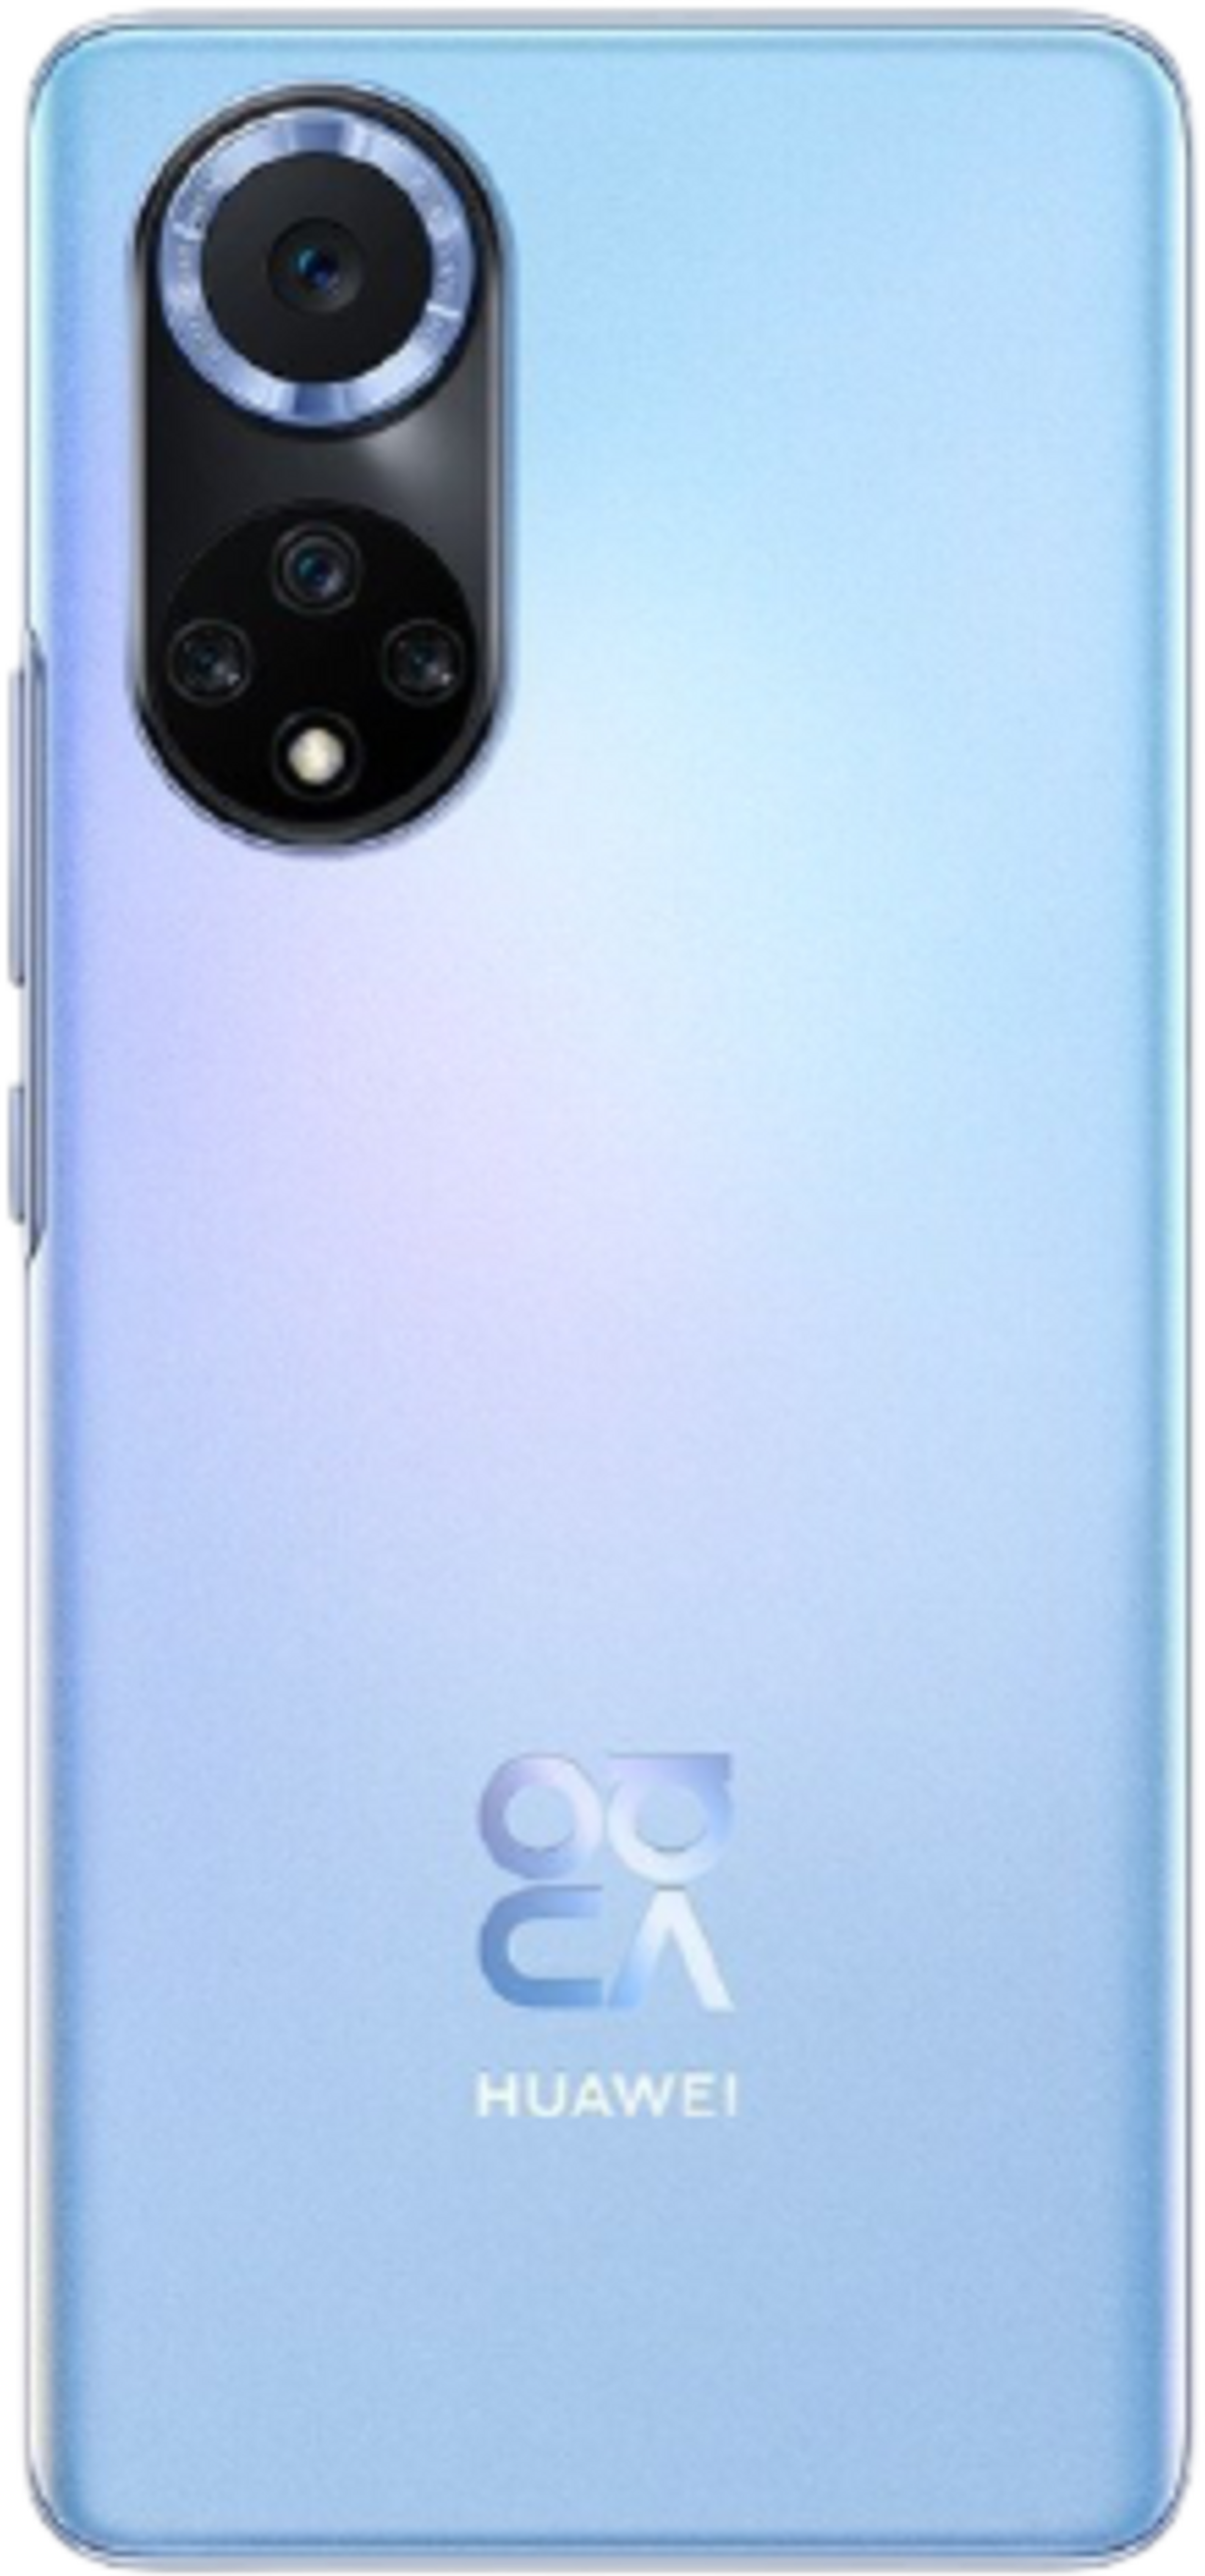 هاتف هواوي نوفا 9 بسعة 128 جيجابايت - أزرق